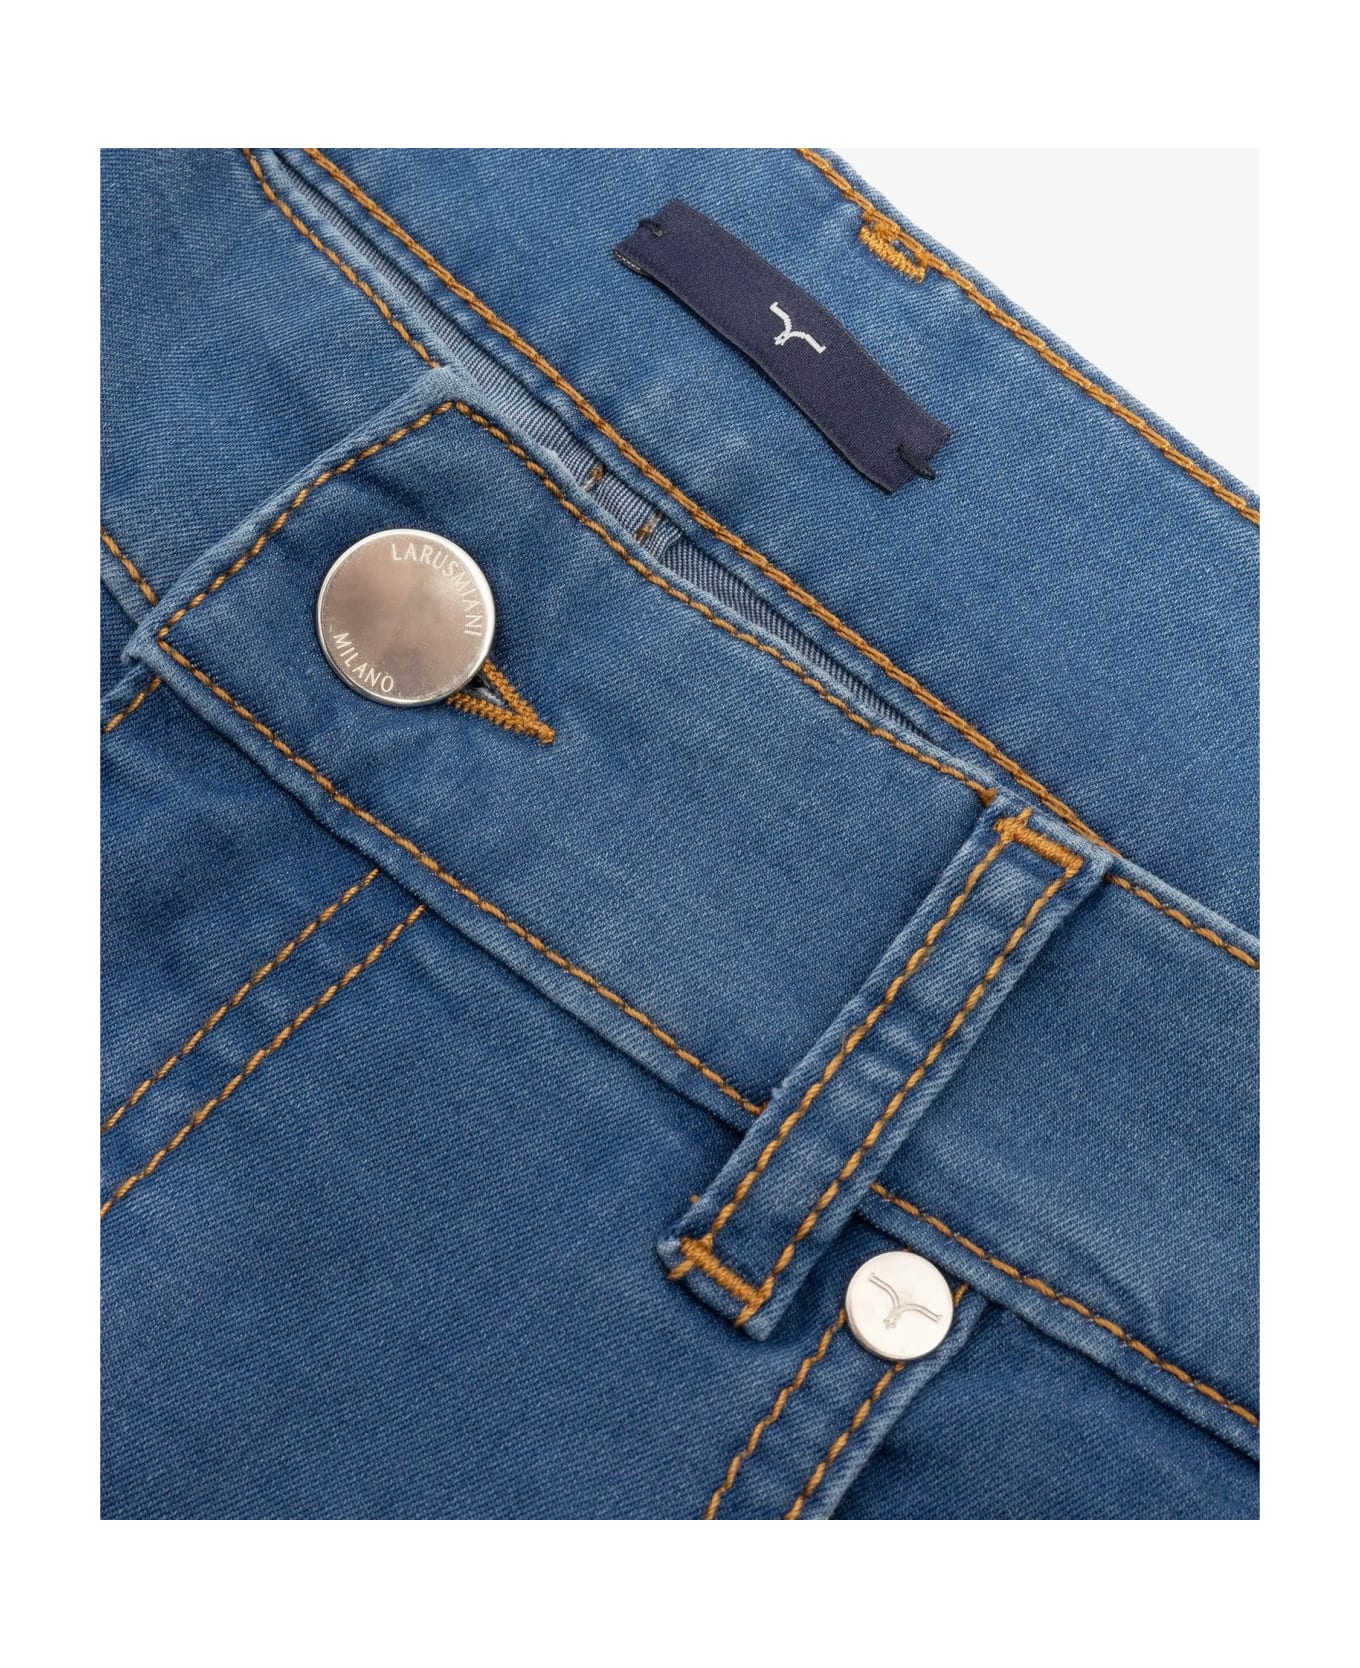 Larusmiani Trousers Jeans Five Pockets Jeans - LightBlue